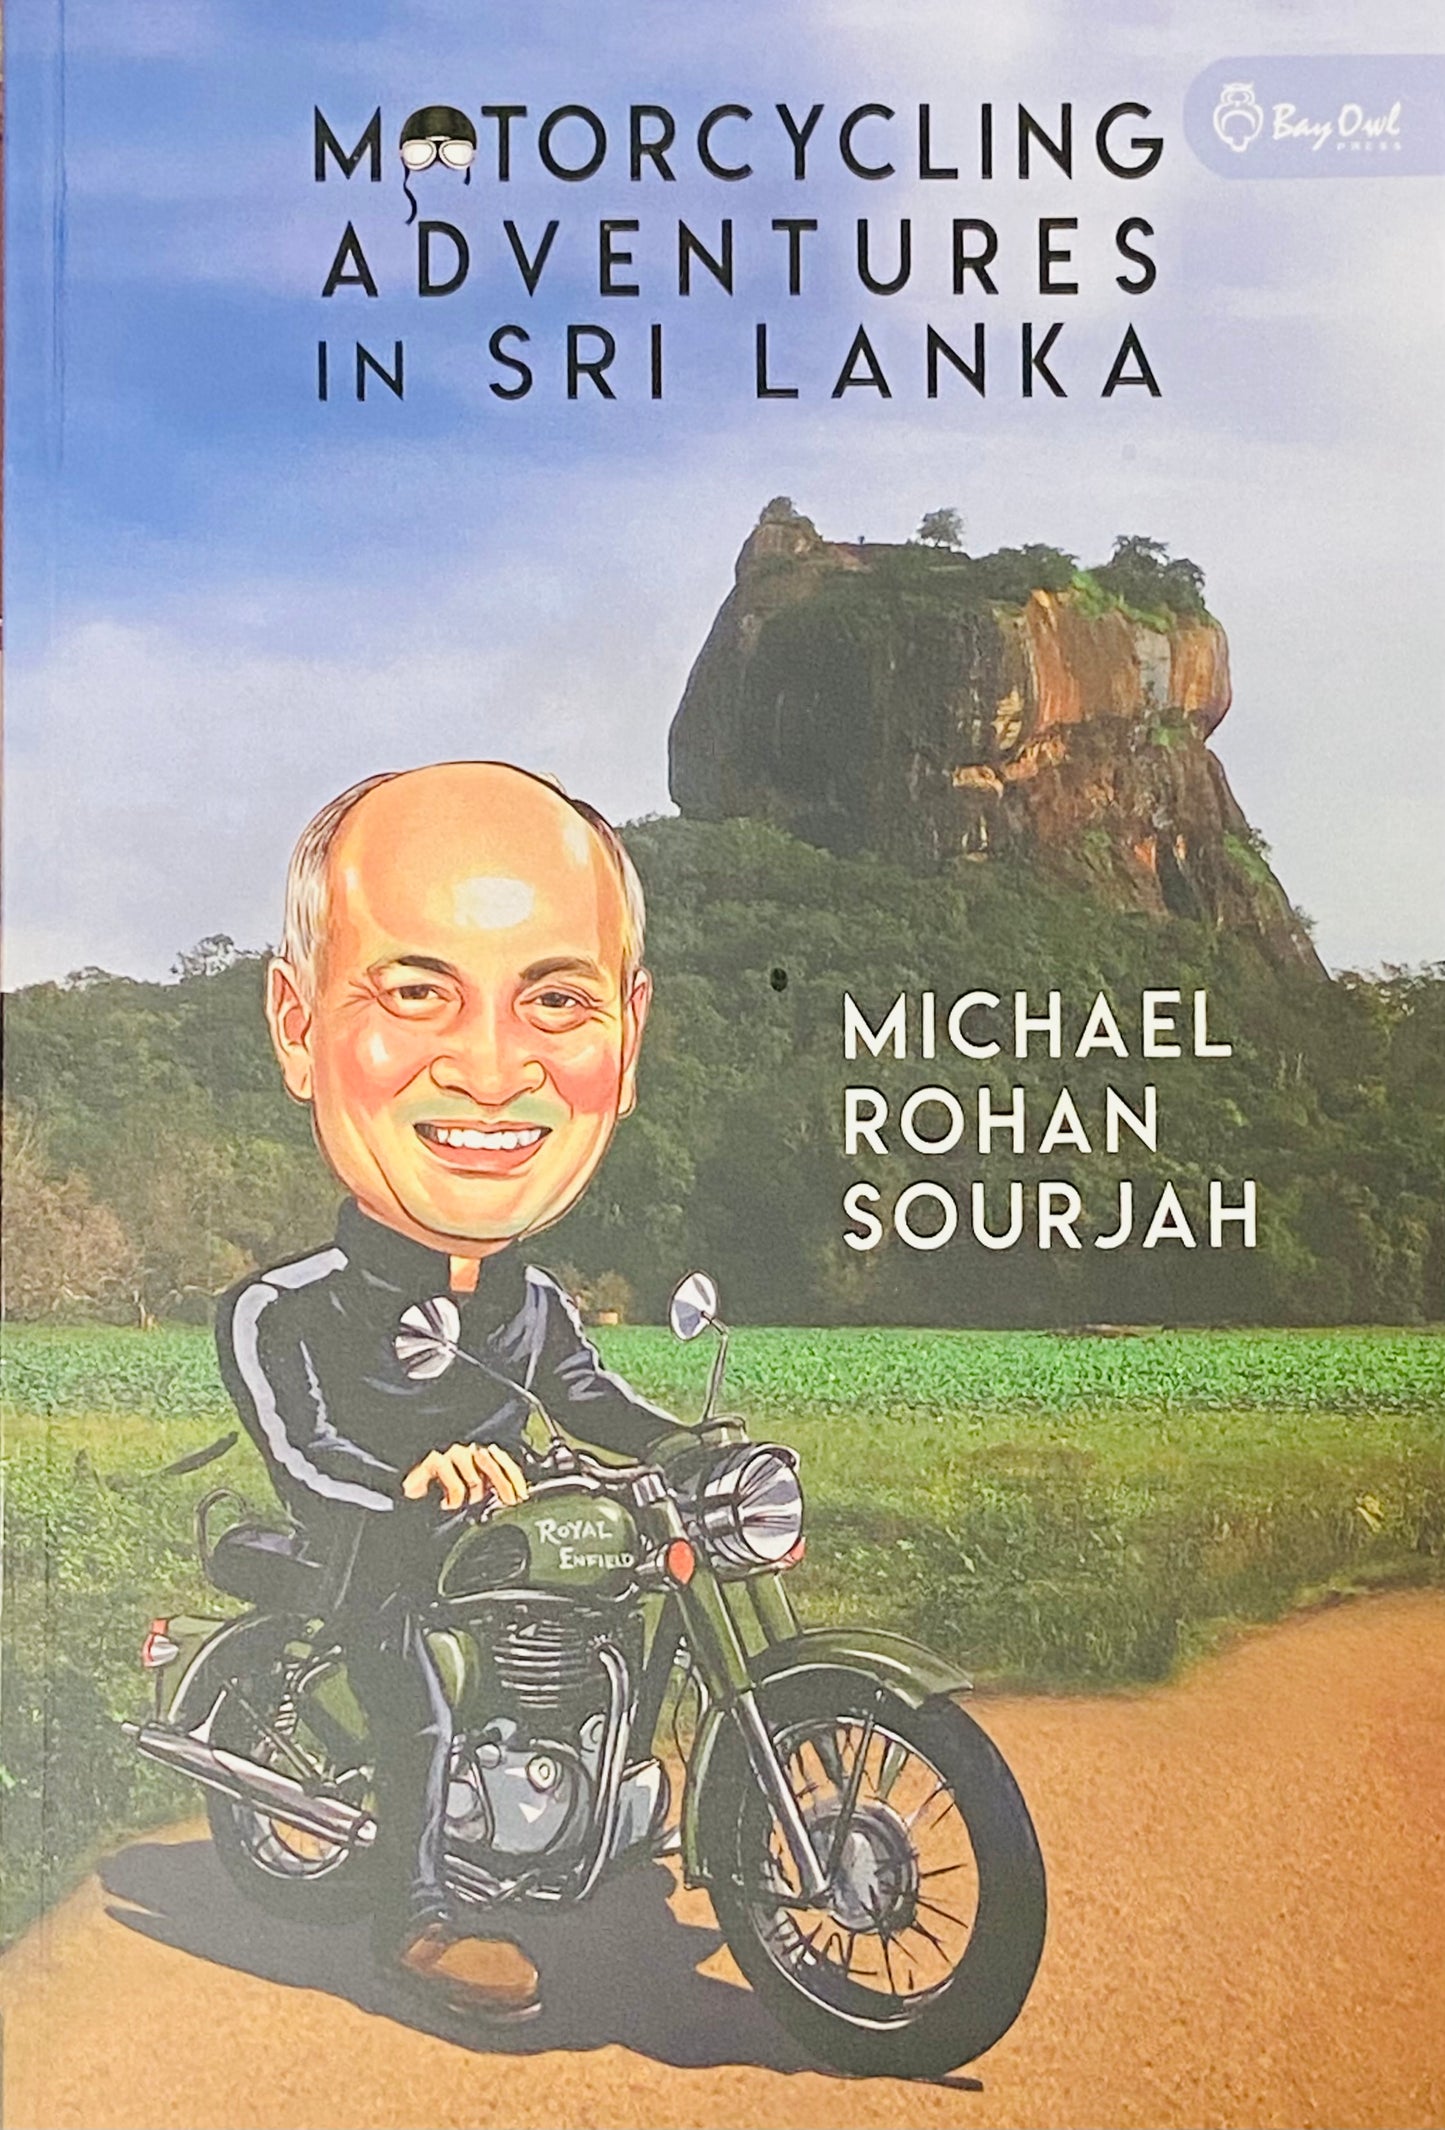 Motorcycling Adventures in Sri Lanka by Michael Rohan Sourjah